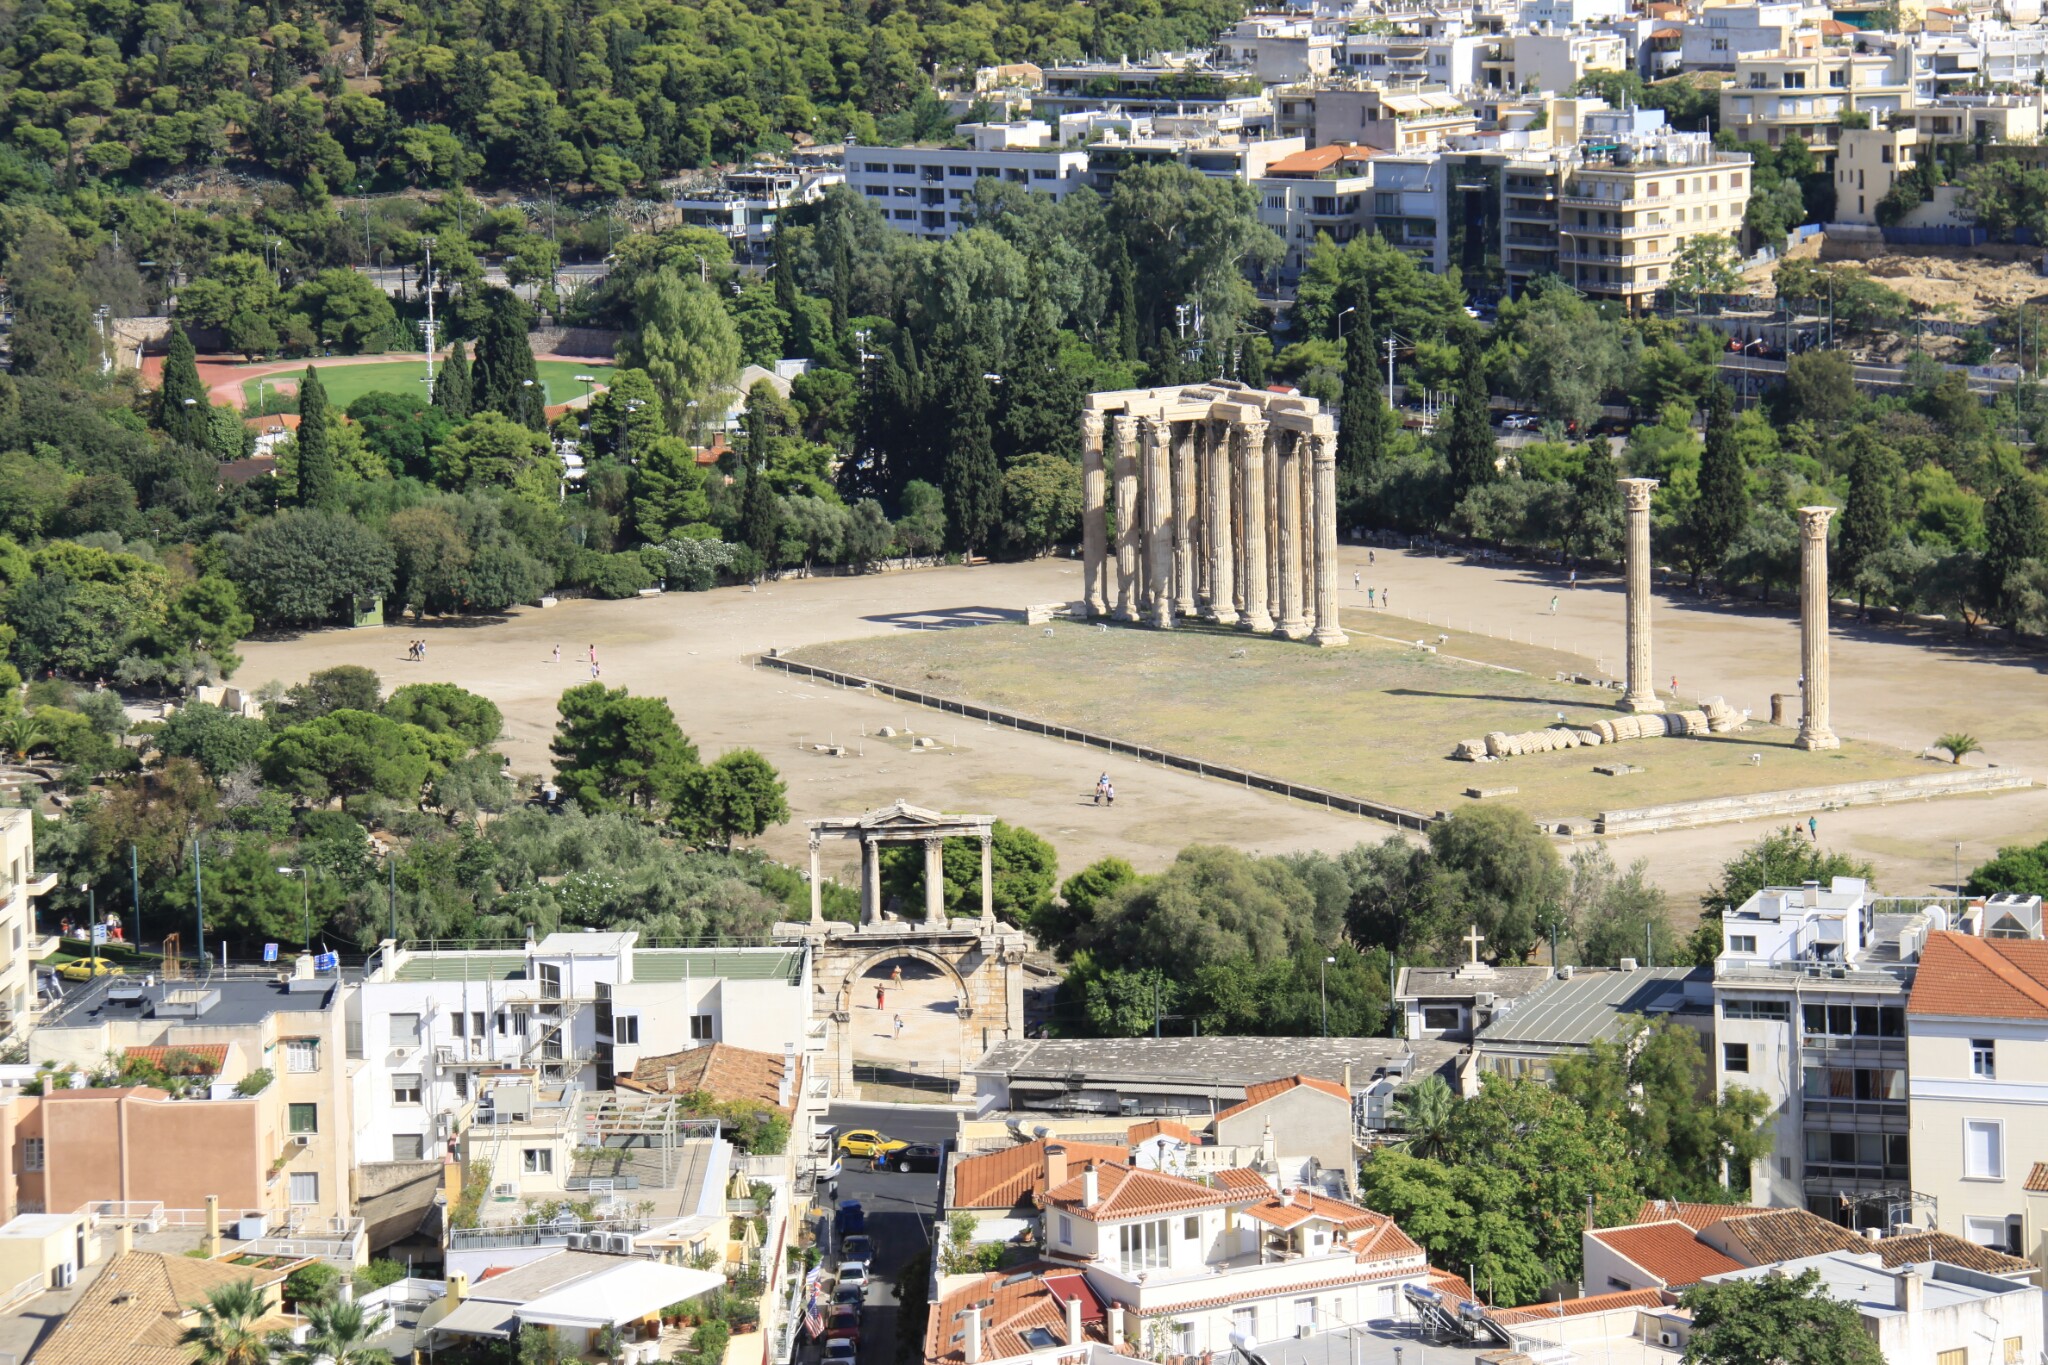 Greece 2014 vacation highlights